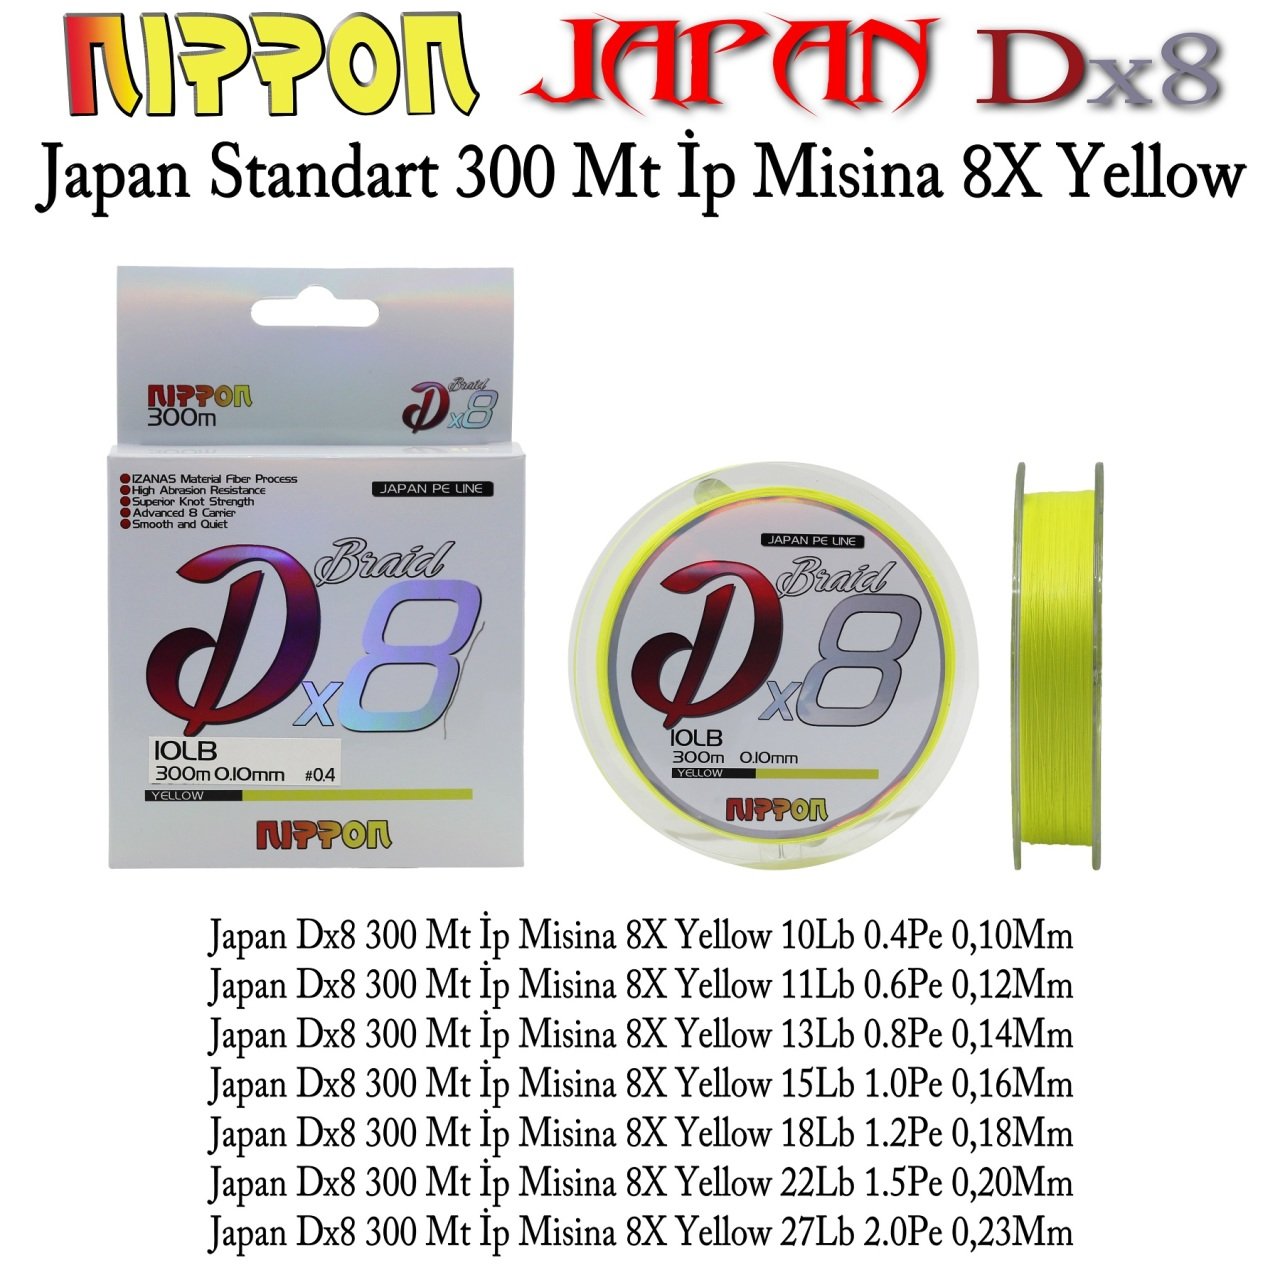 Japan Dx8 300 Mt İp Misina 8X Yellow